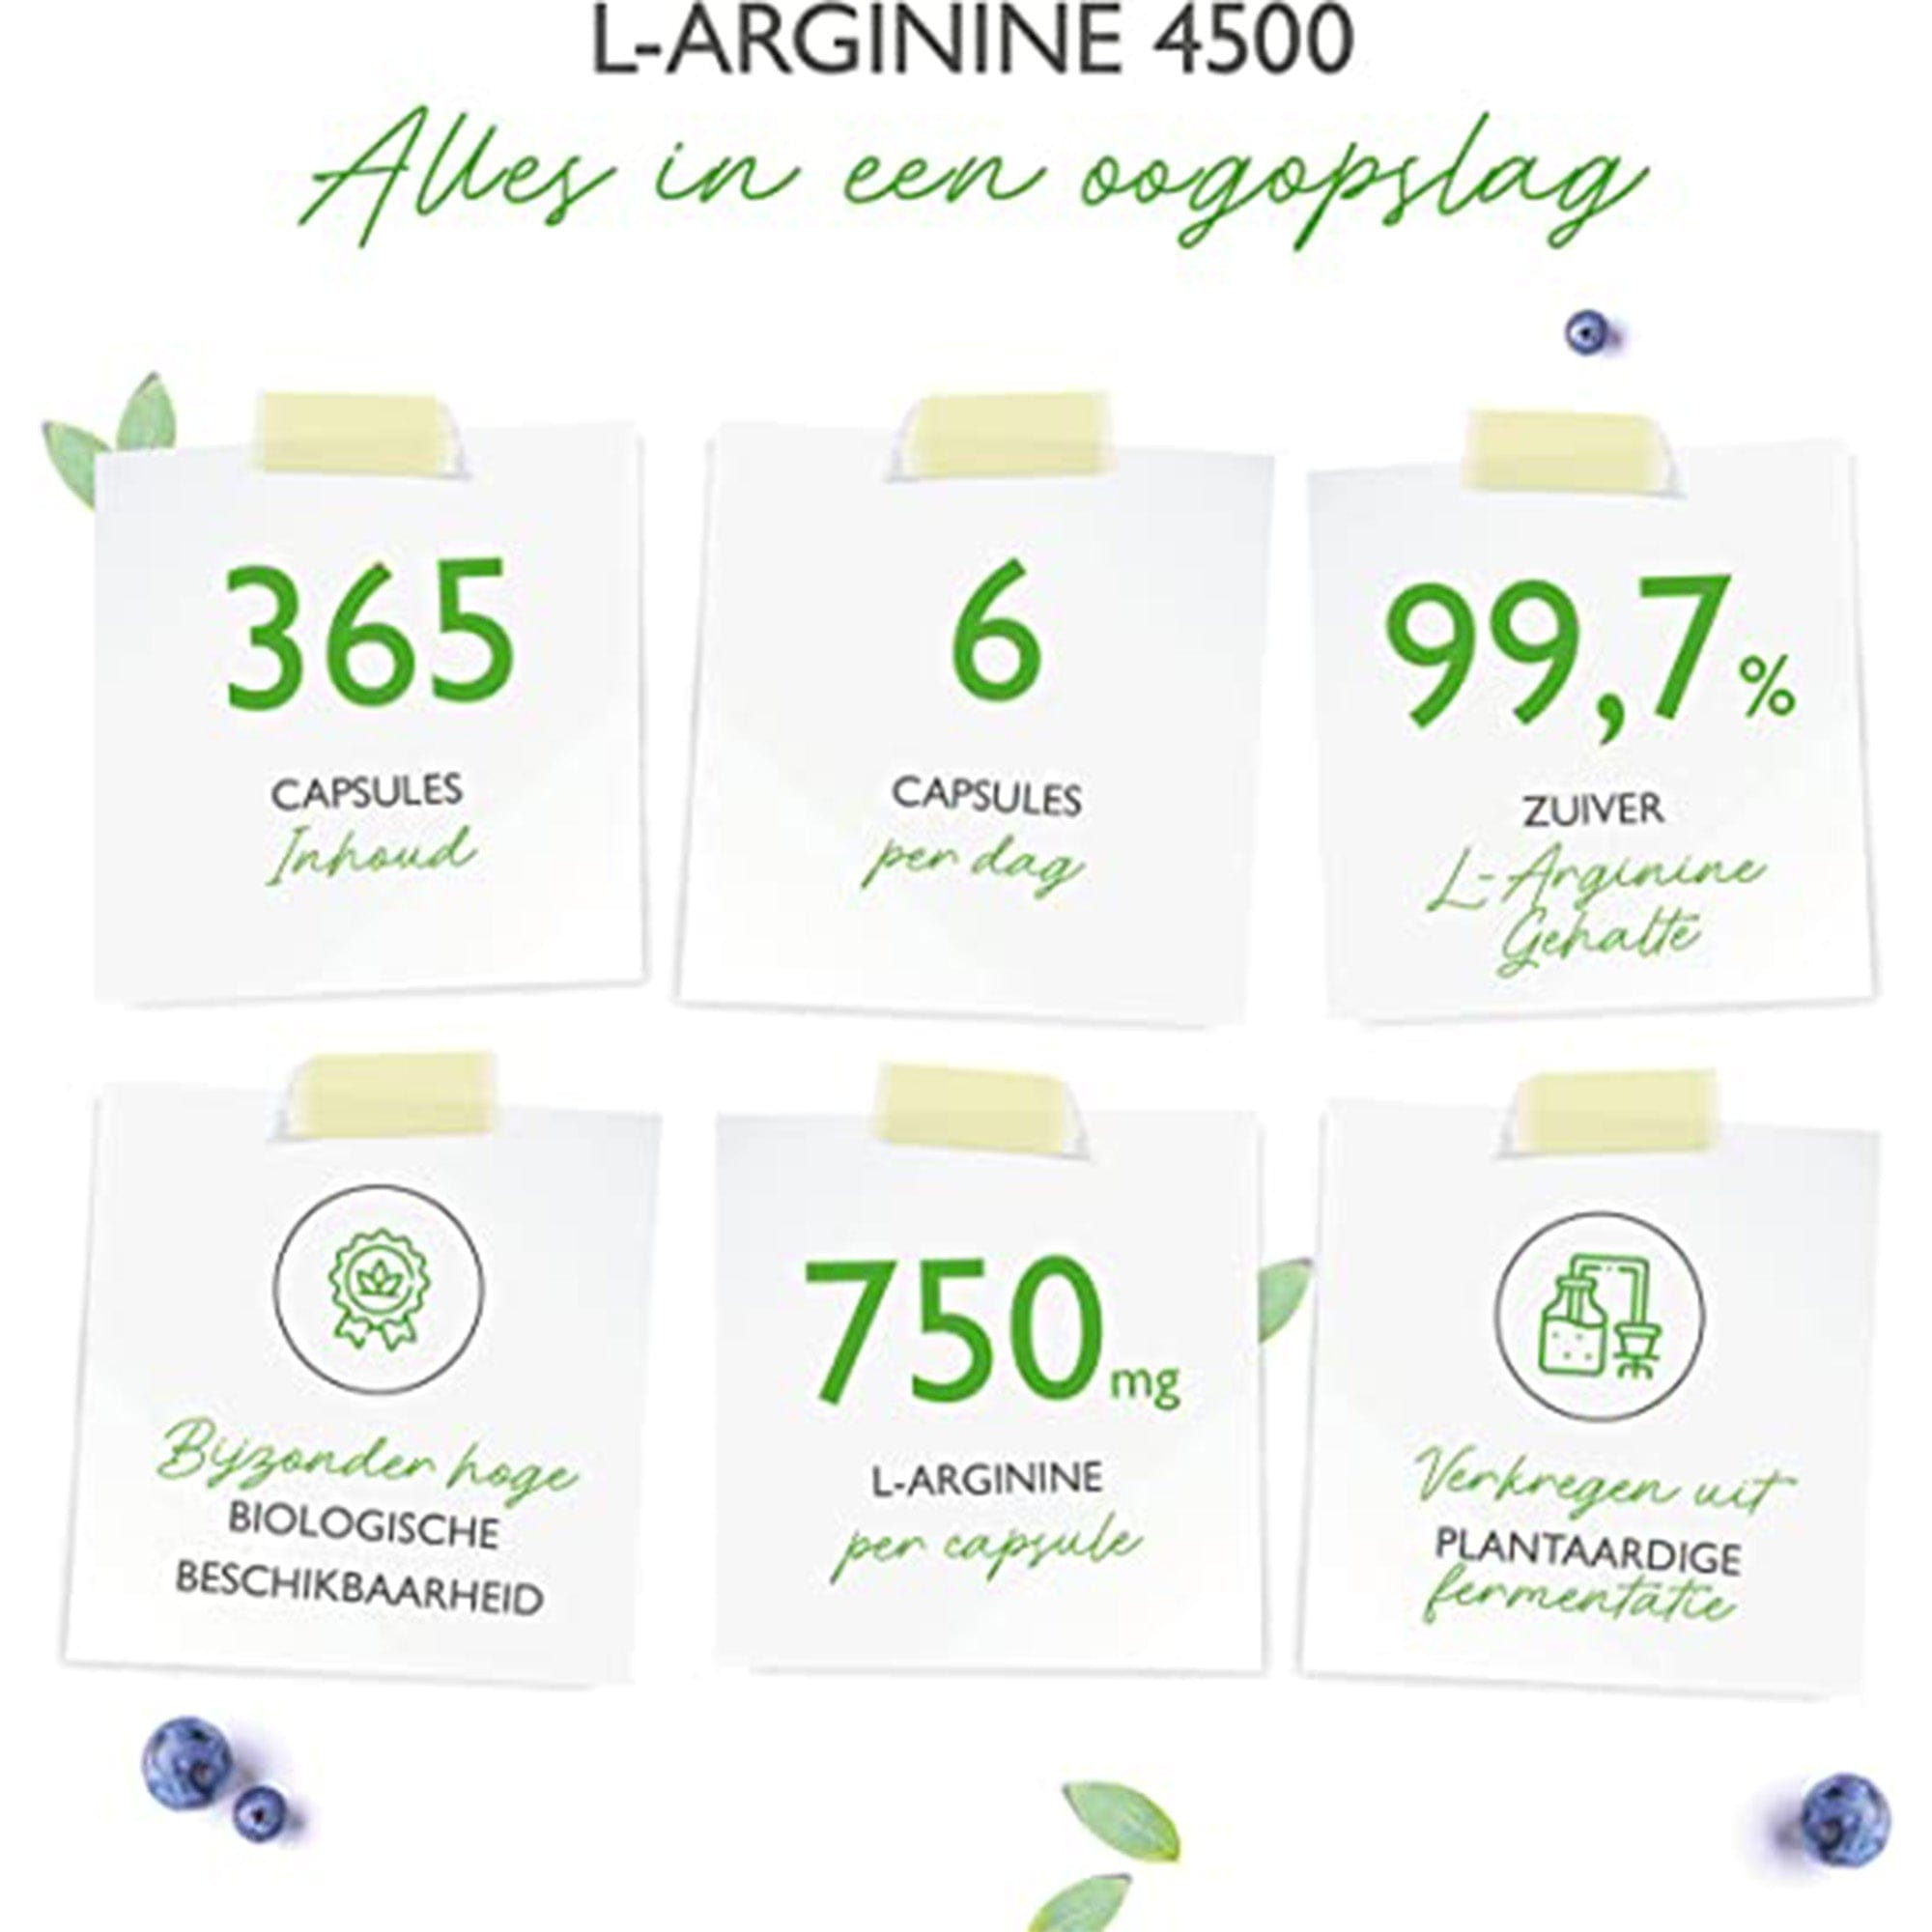 Vit4ever L-Arginine | 365 vegan capsules | Premium: 4500 mg pure L-Arginine per dagelijkse dosis | Gemaakt door plantaardige fermentatie | Hoog gedoseerd | Veganistisch